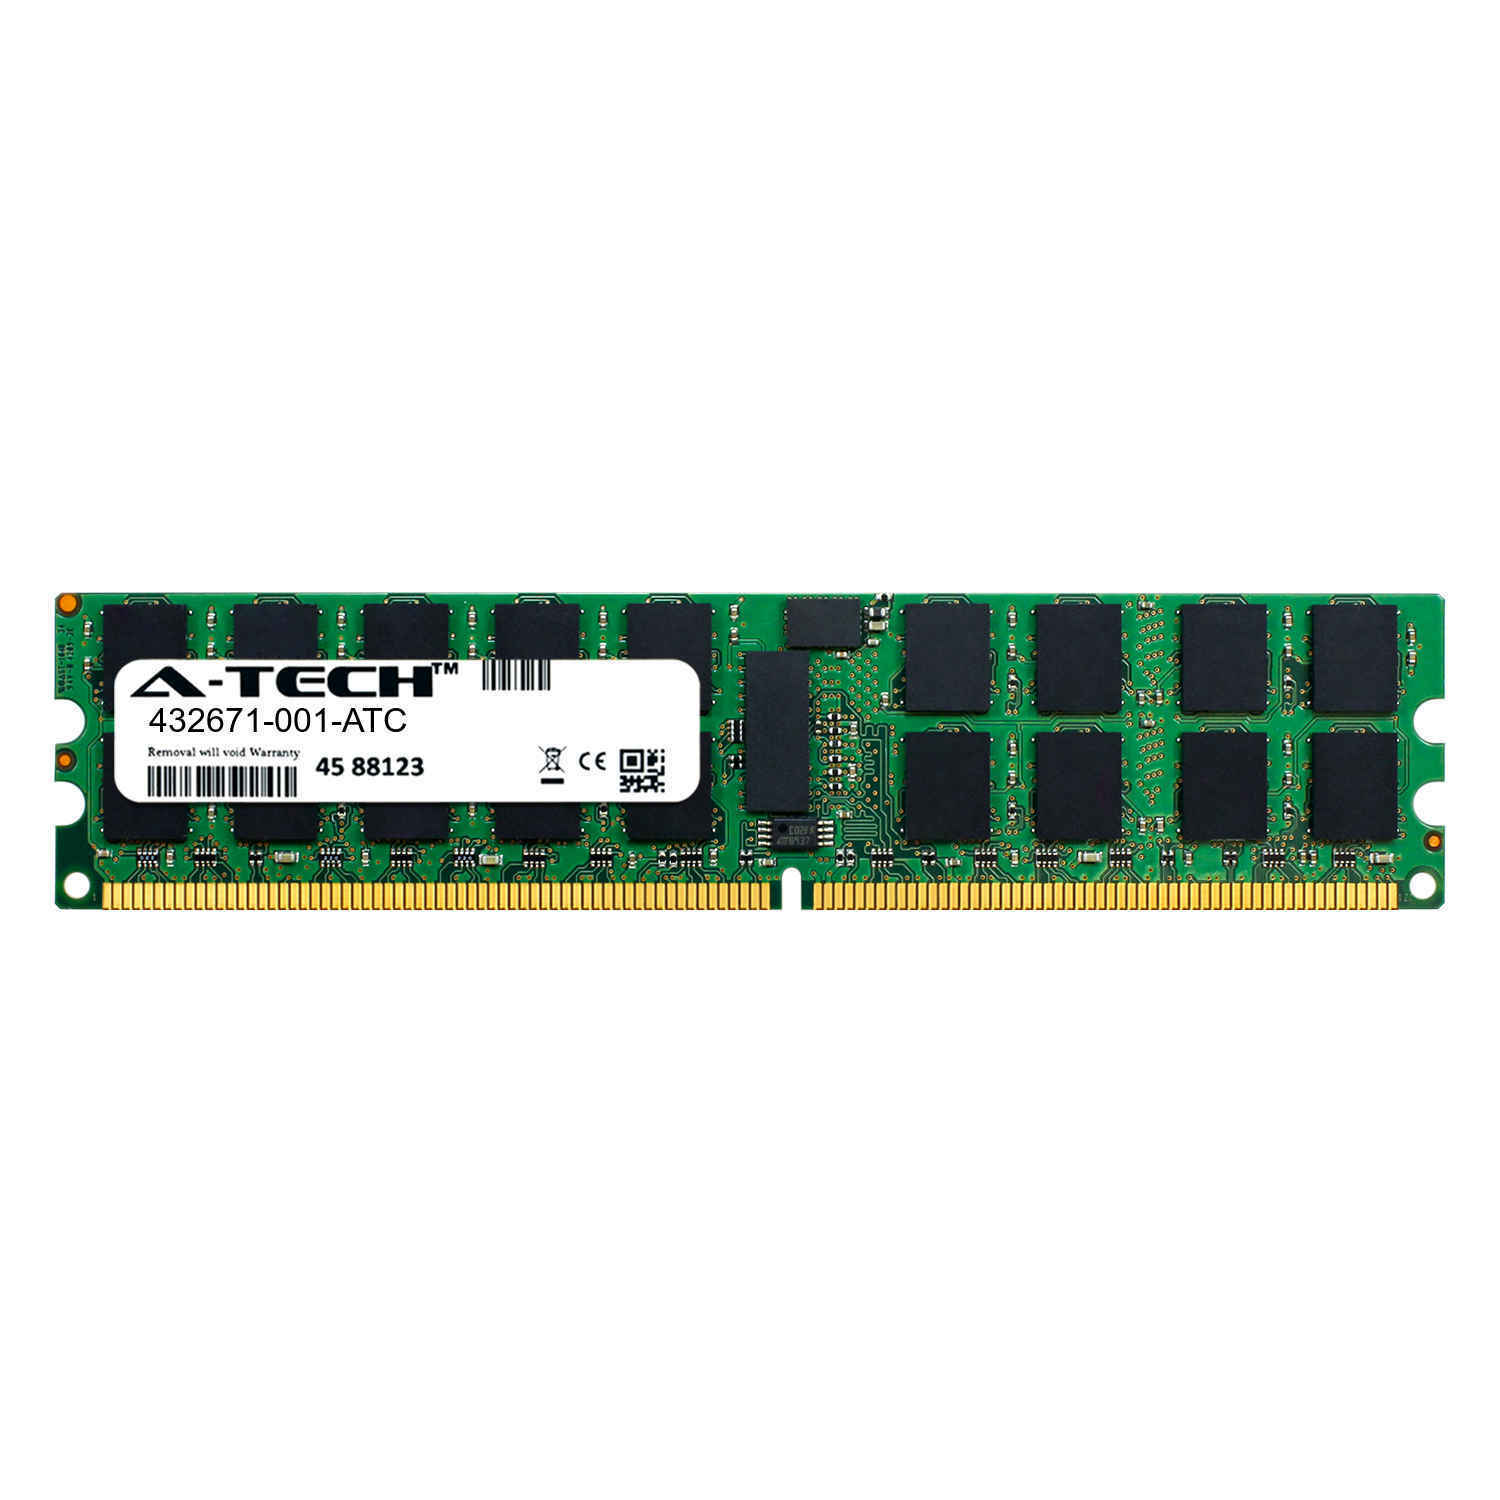 8GB DDR2 PC2-5300R 667MHz RDIMM (HP 432671-001 Equivalent) Server Memory RAM